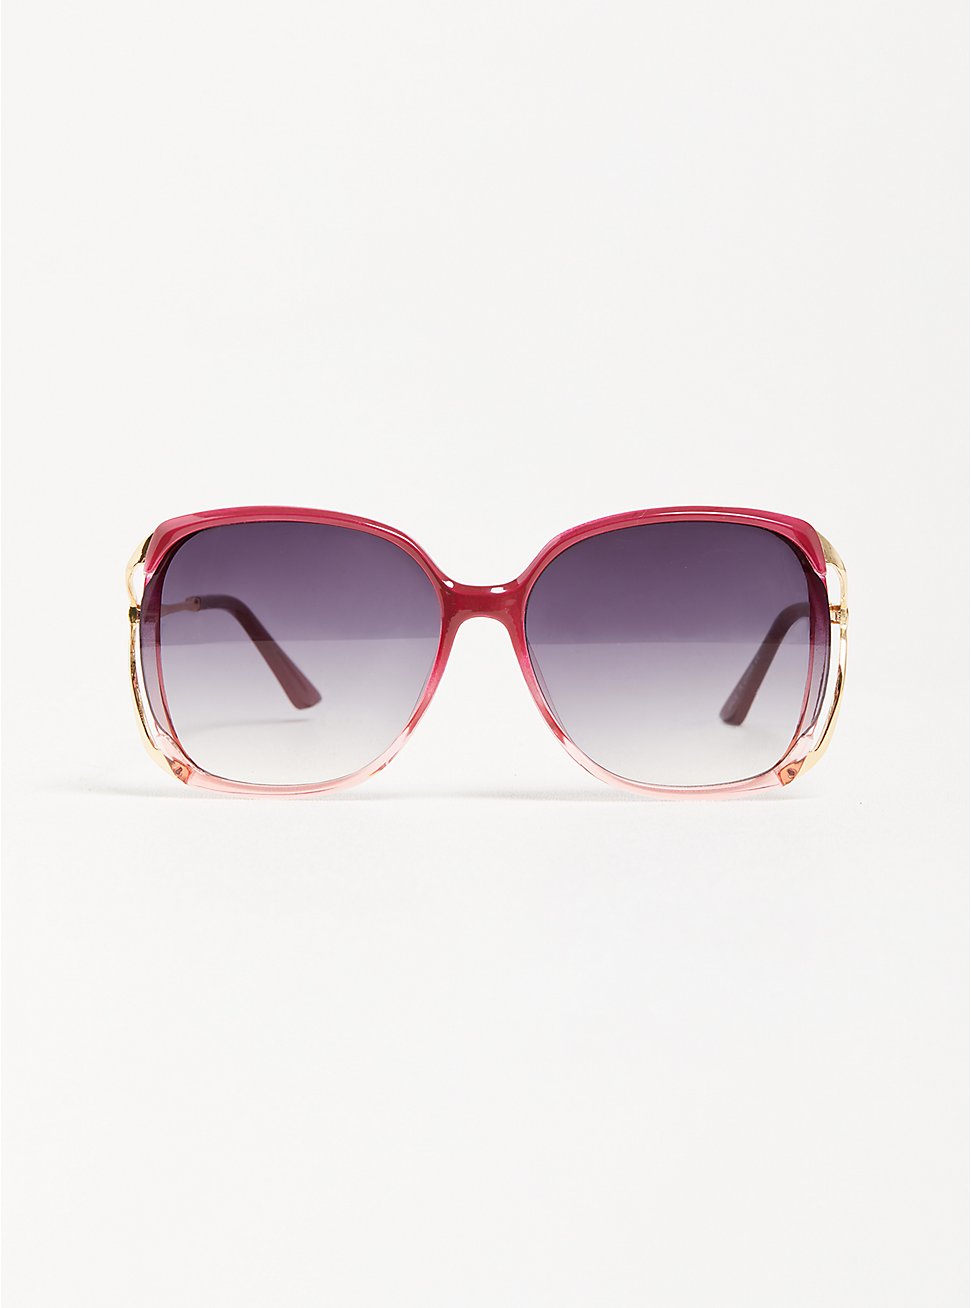 Plus Size Square Cut-Out Sunglasses - Burgundy Fade, , hi-res